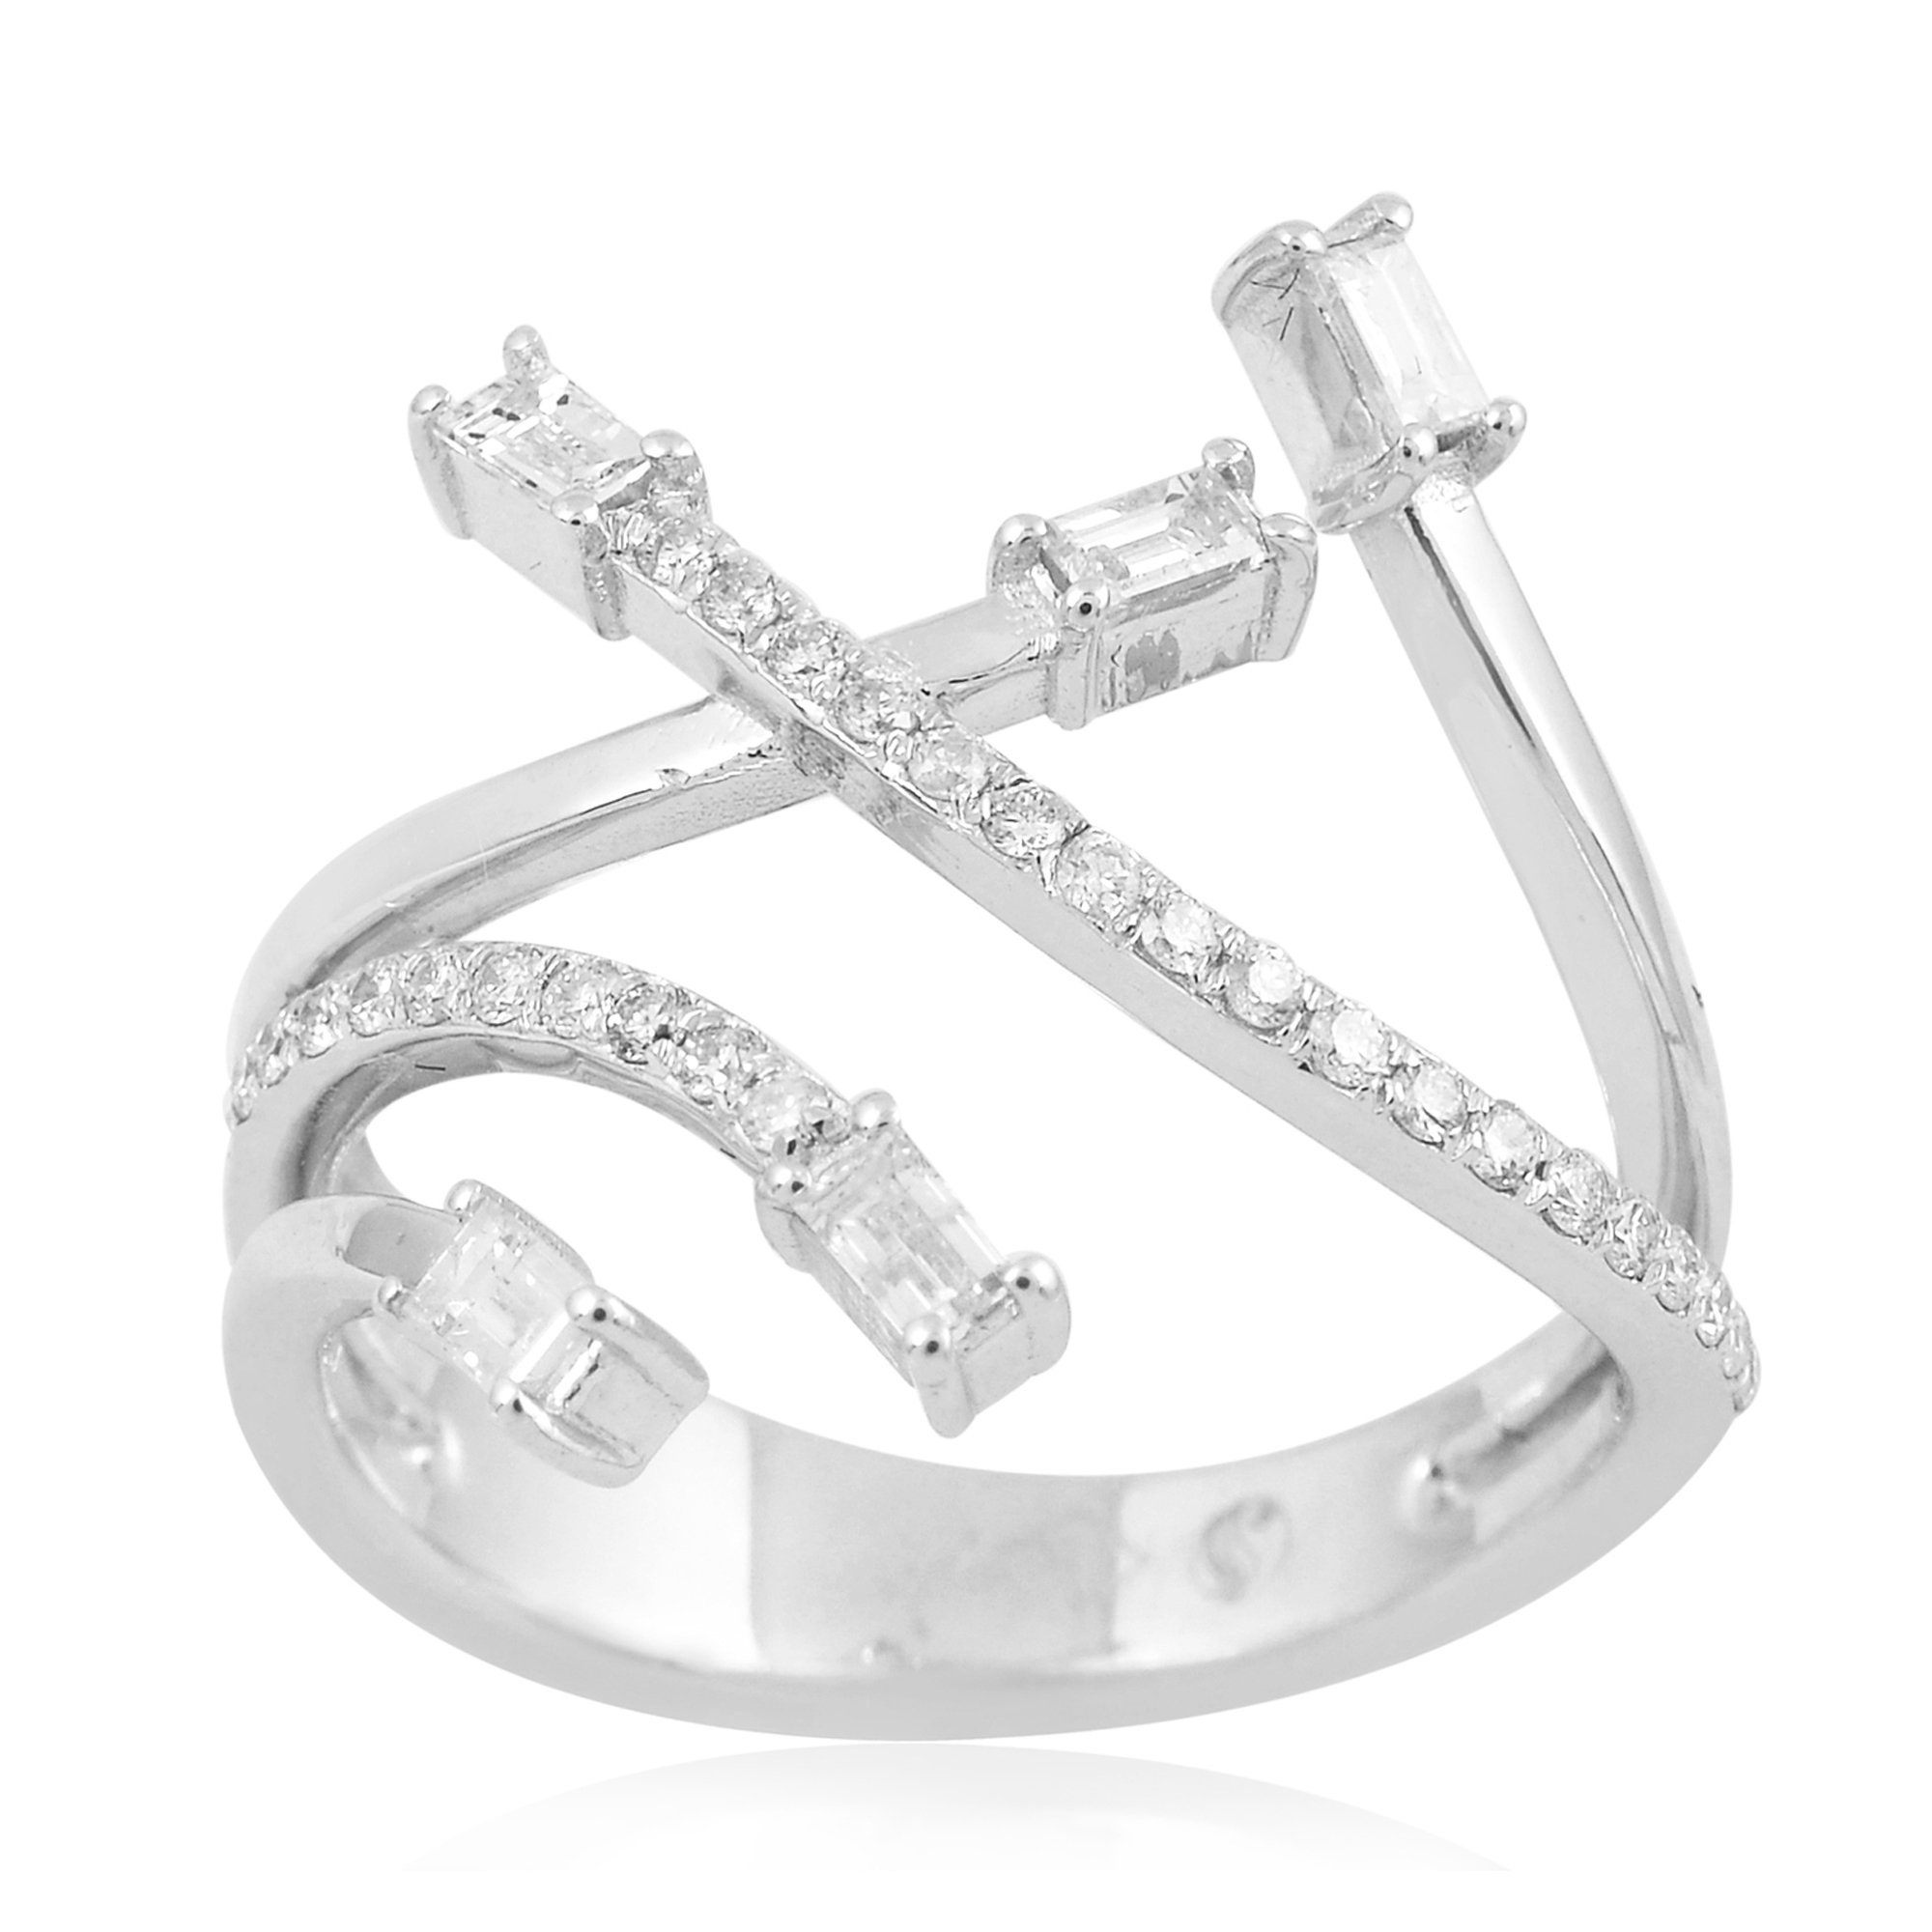 Unique Design Solid 18K White Gold Ring 0.50 Carat Natural Diamond | Si Clarity, Hi Color Fine Jewelry For Women's